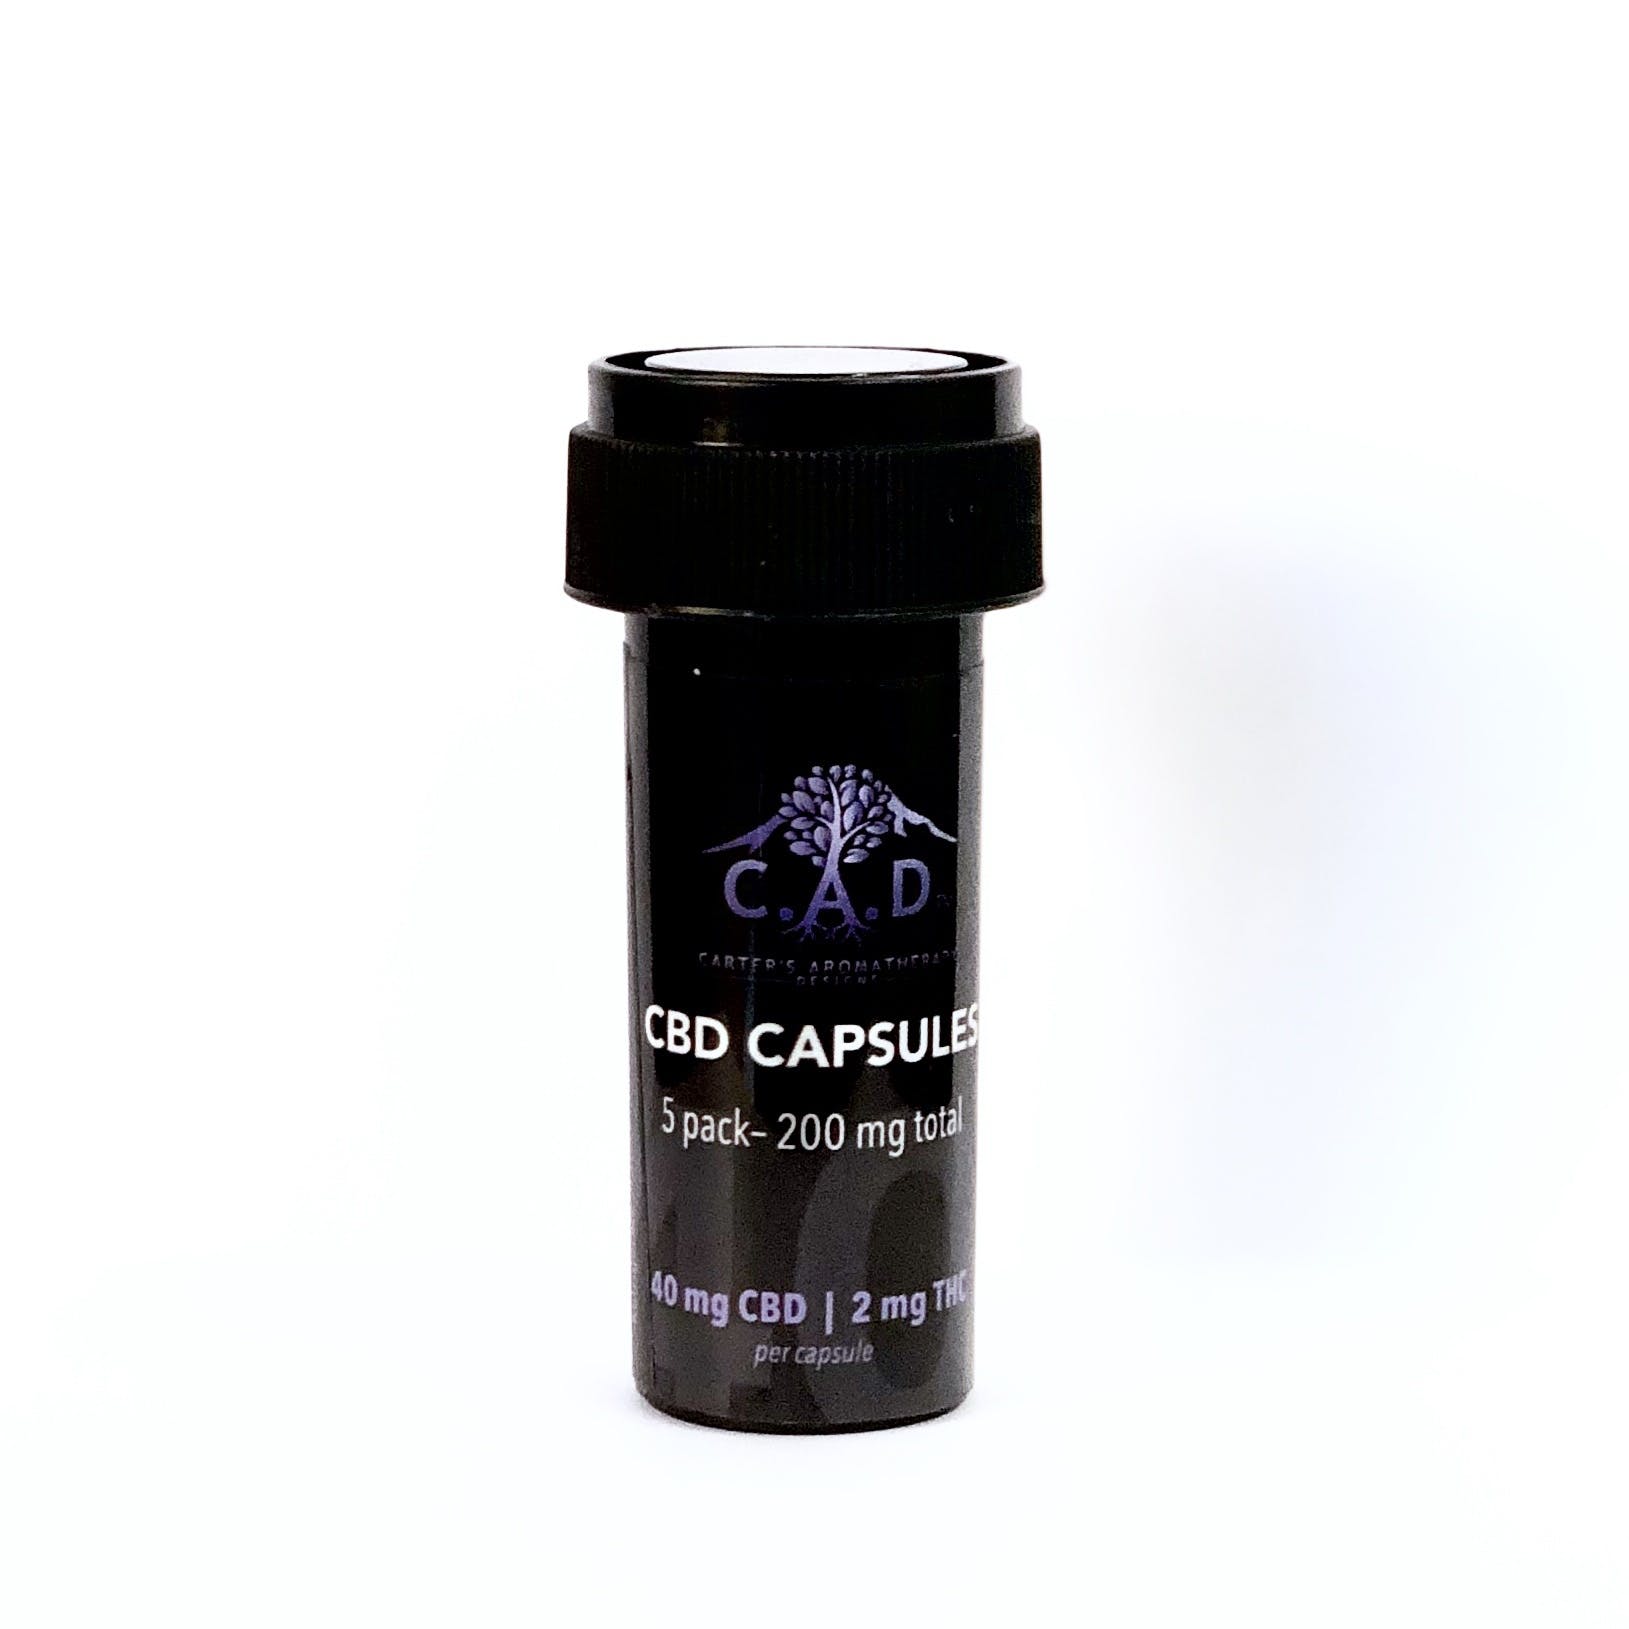 C.A.D: CBD Capsules - 200mg (Medicinal/Recreational)